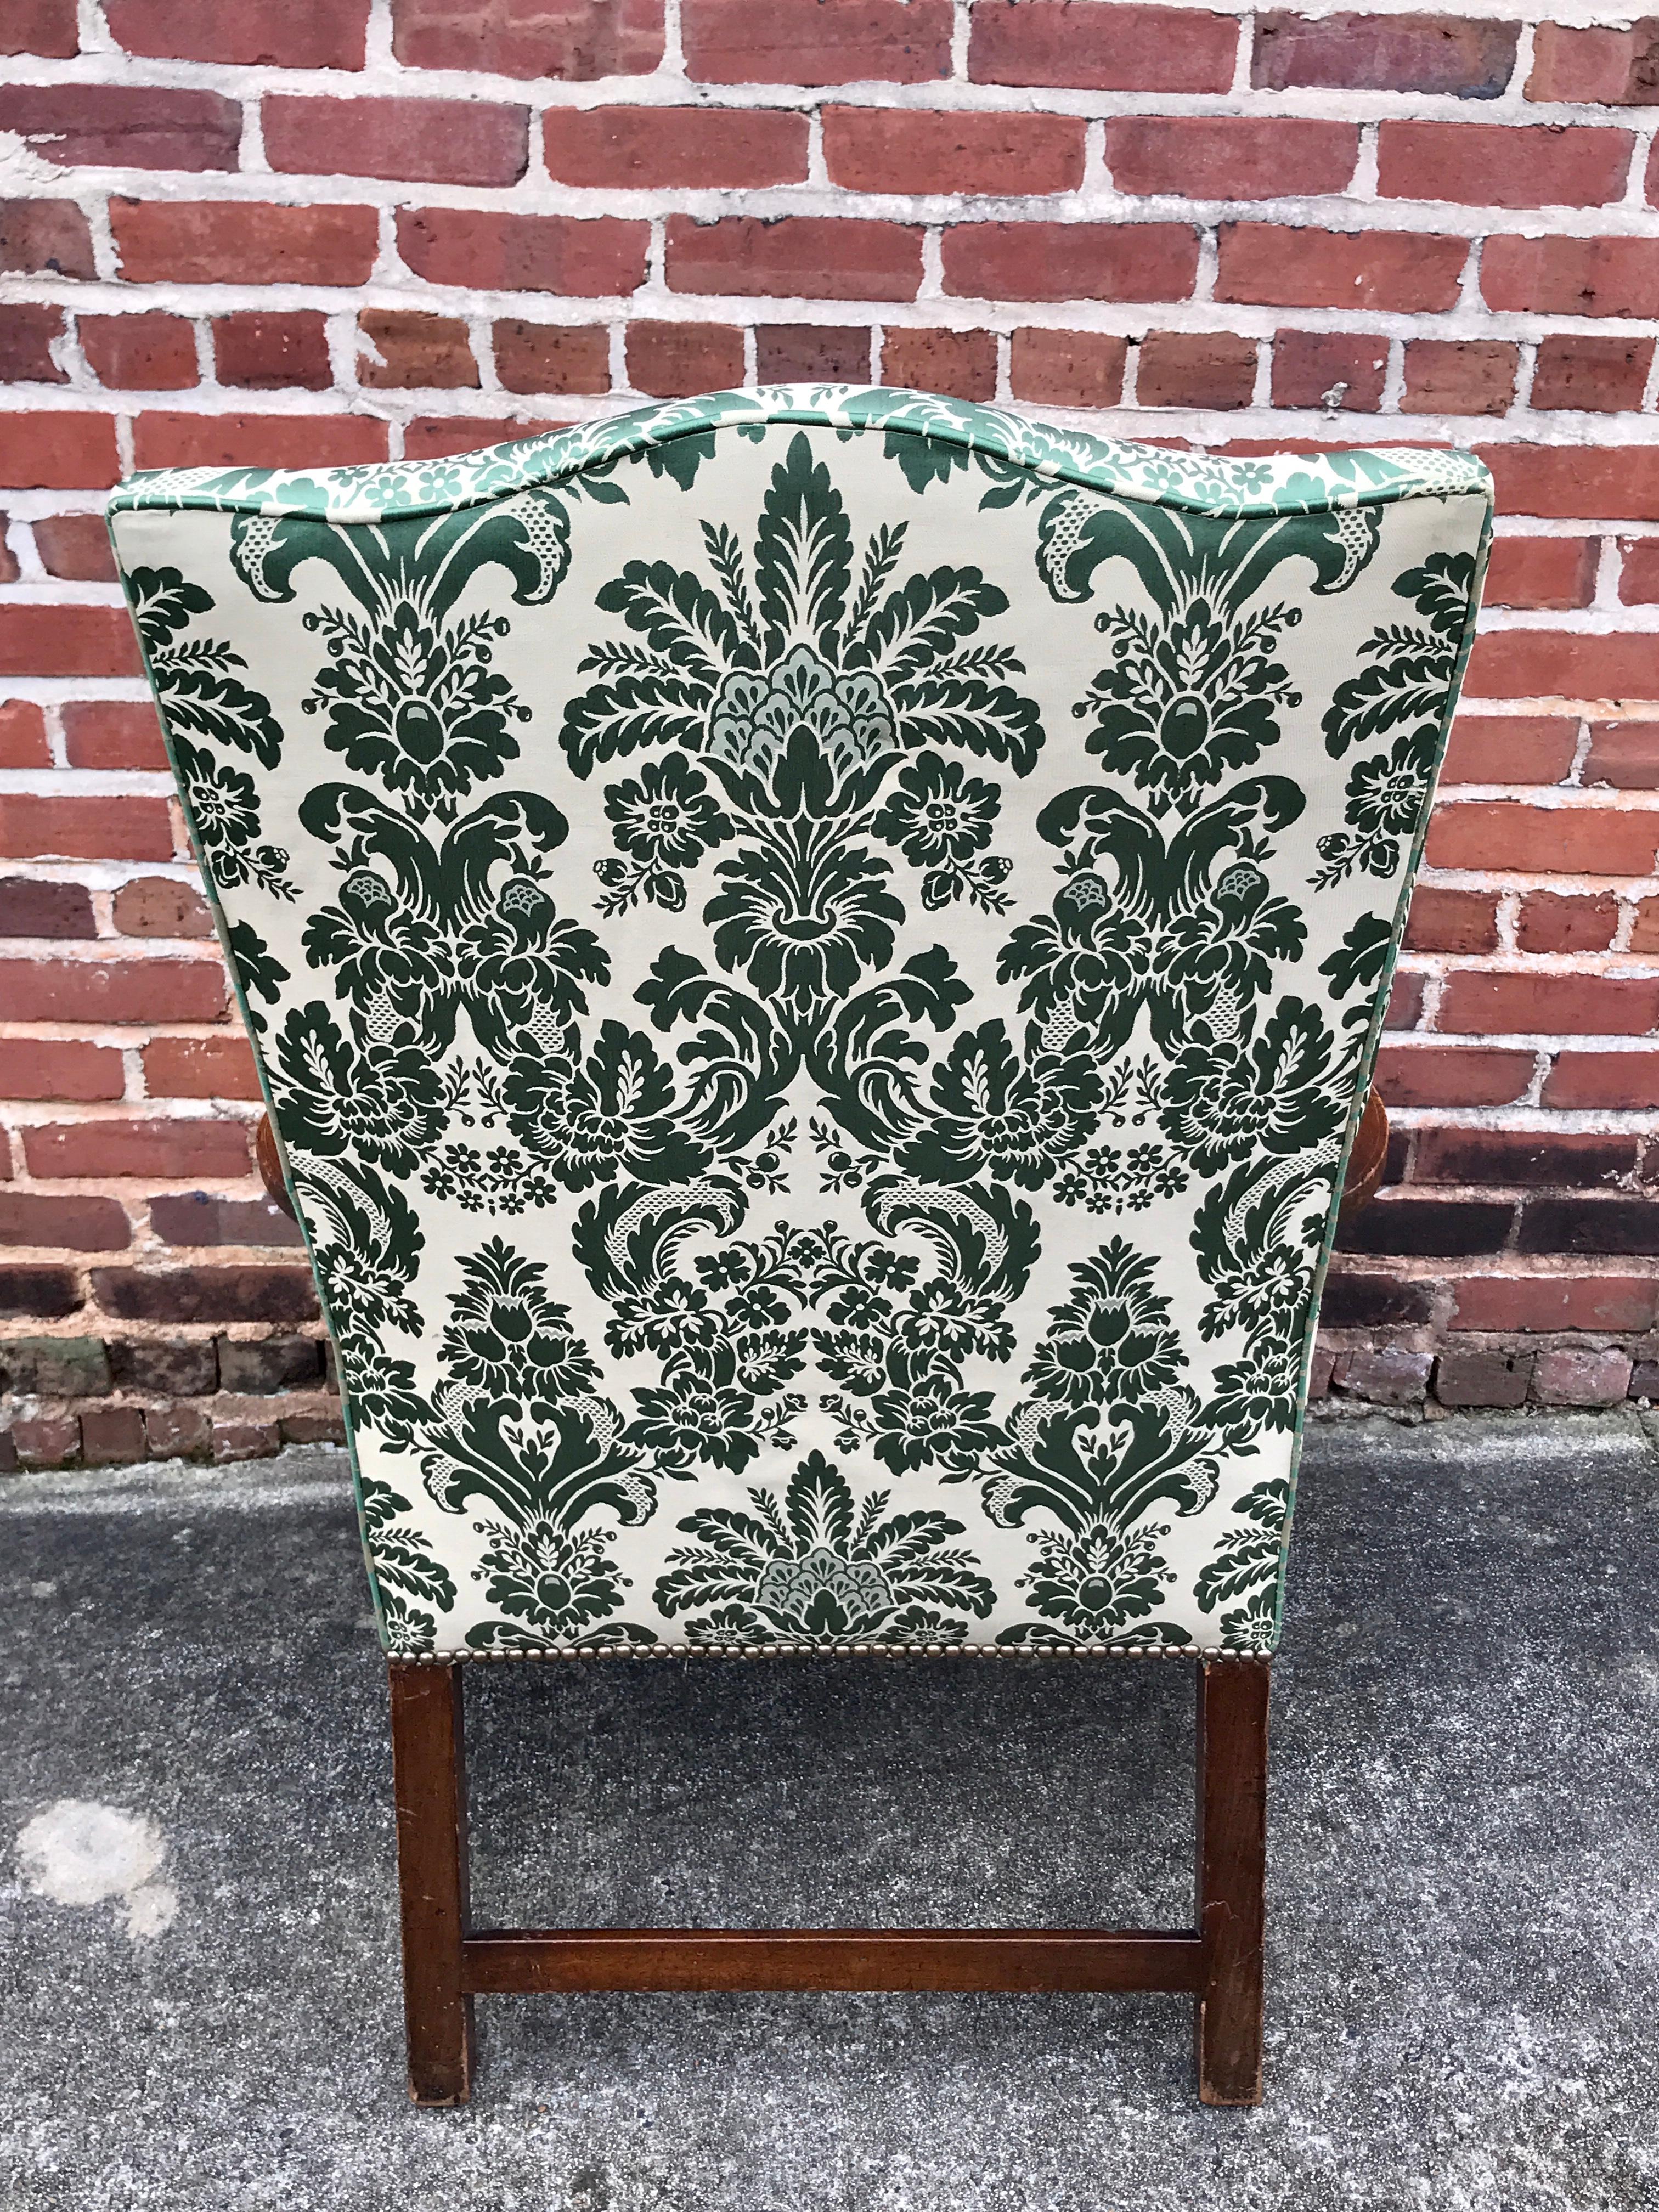 American Hepplewhite Lolling Chair, MA or NH 1